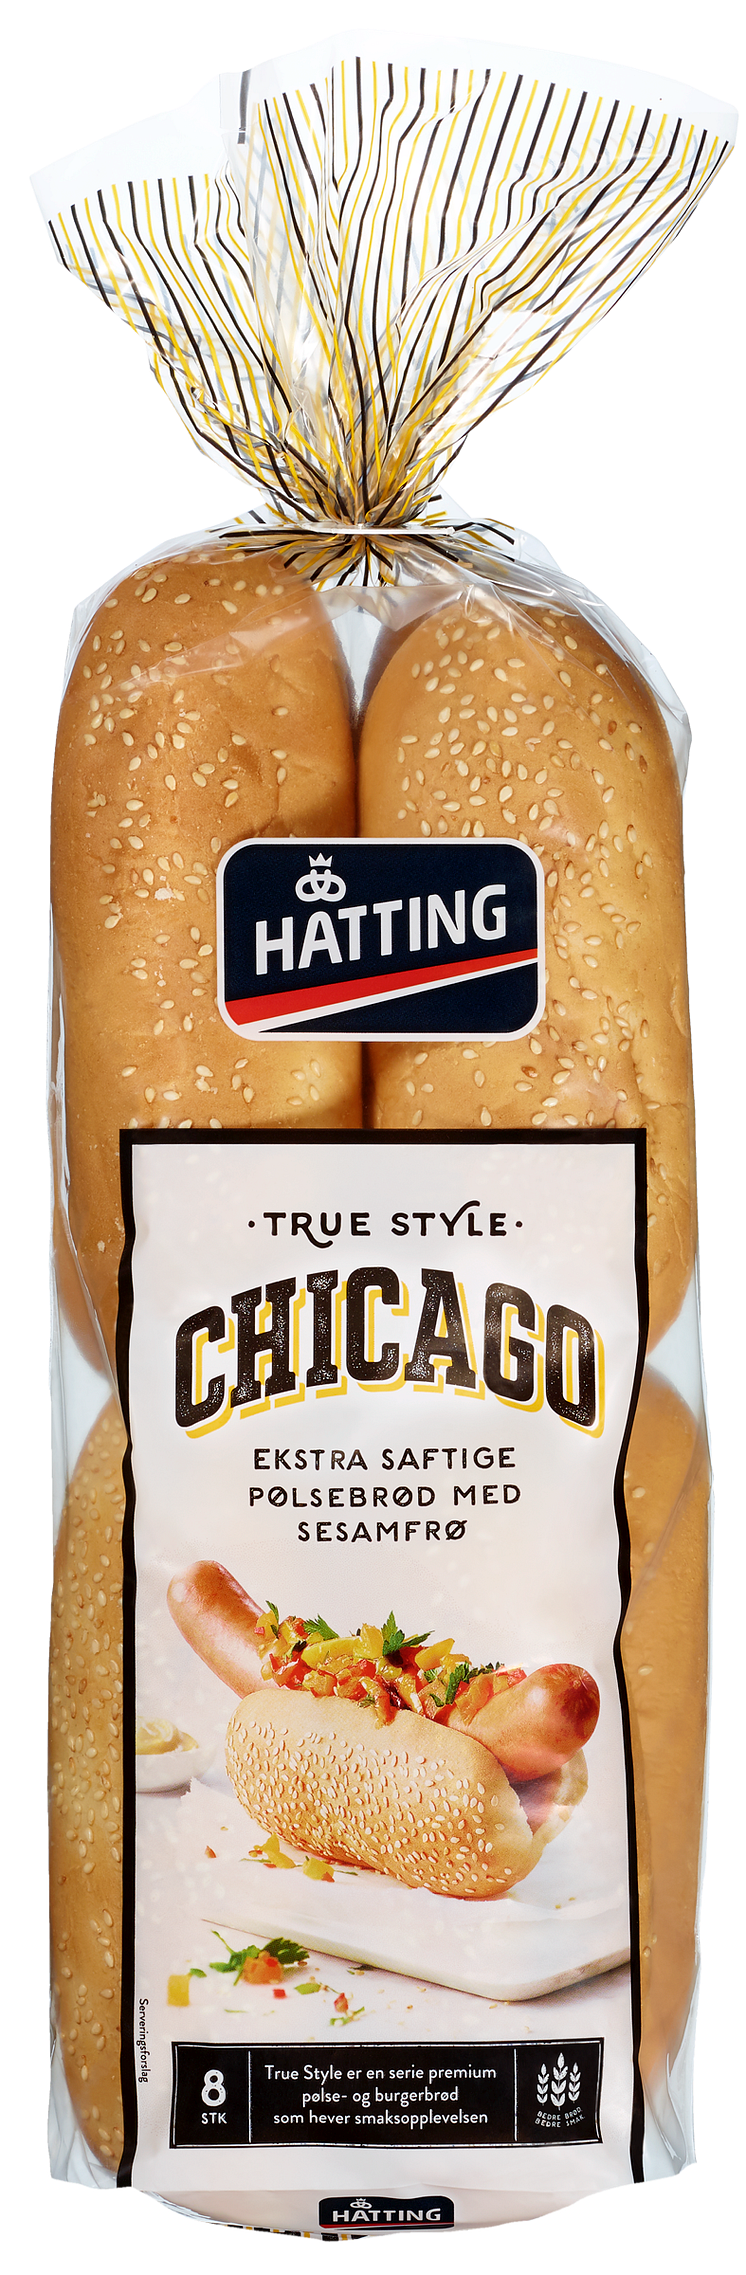 True Style Chicago pølsebrød